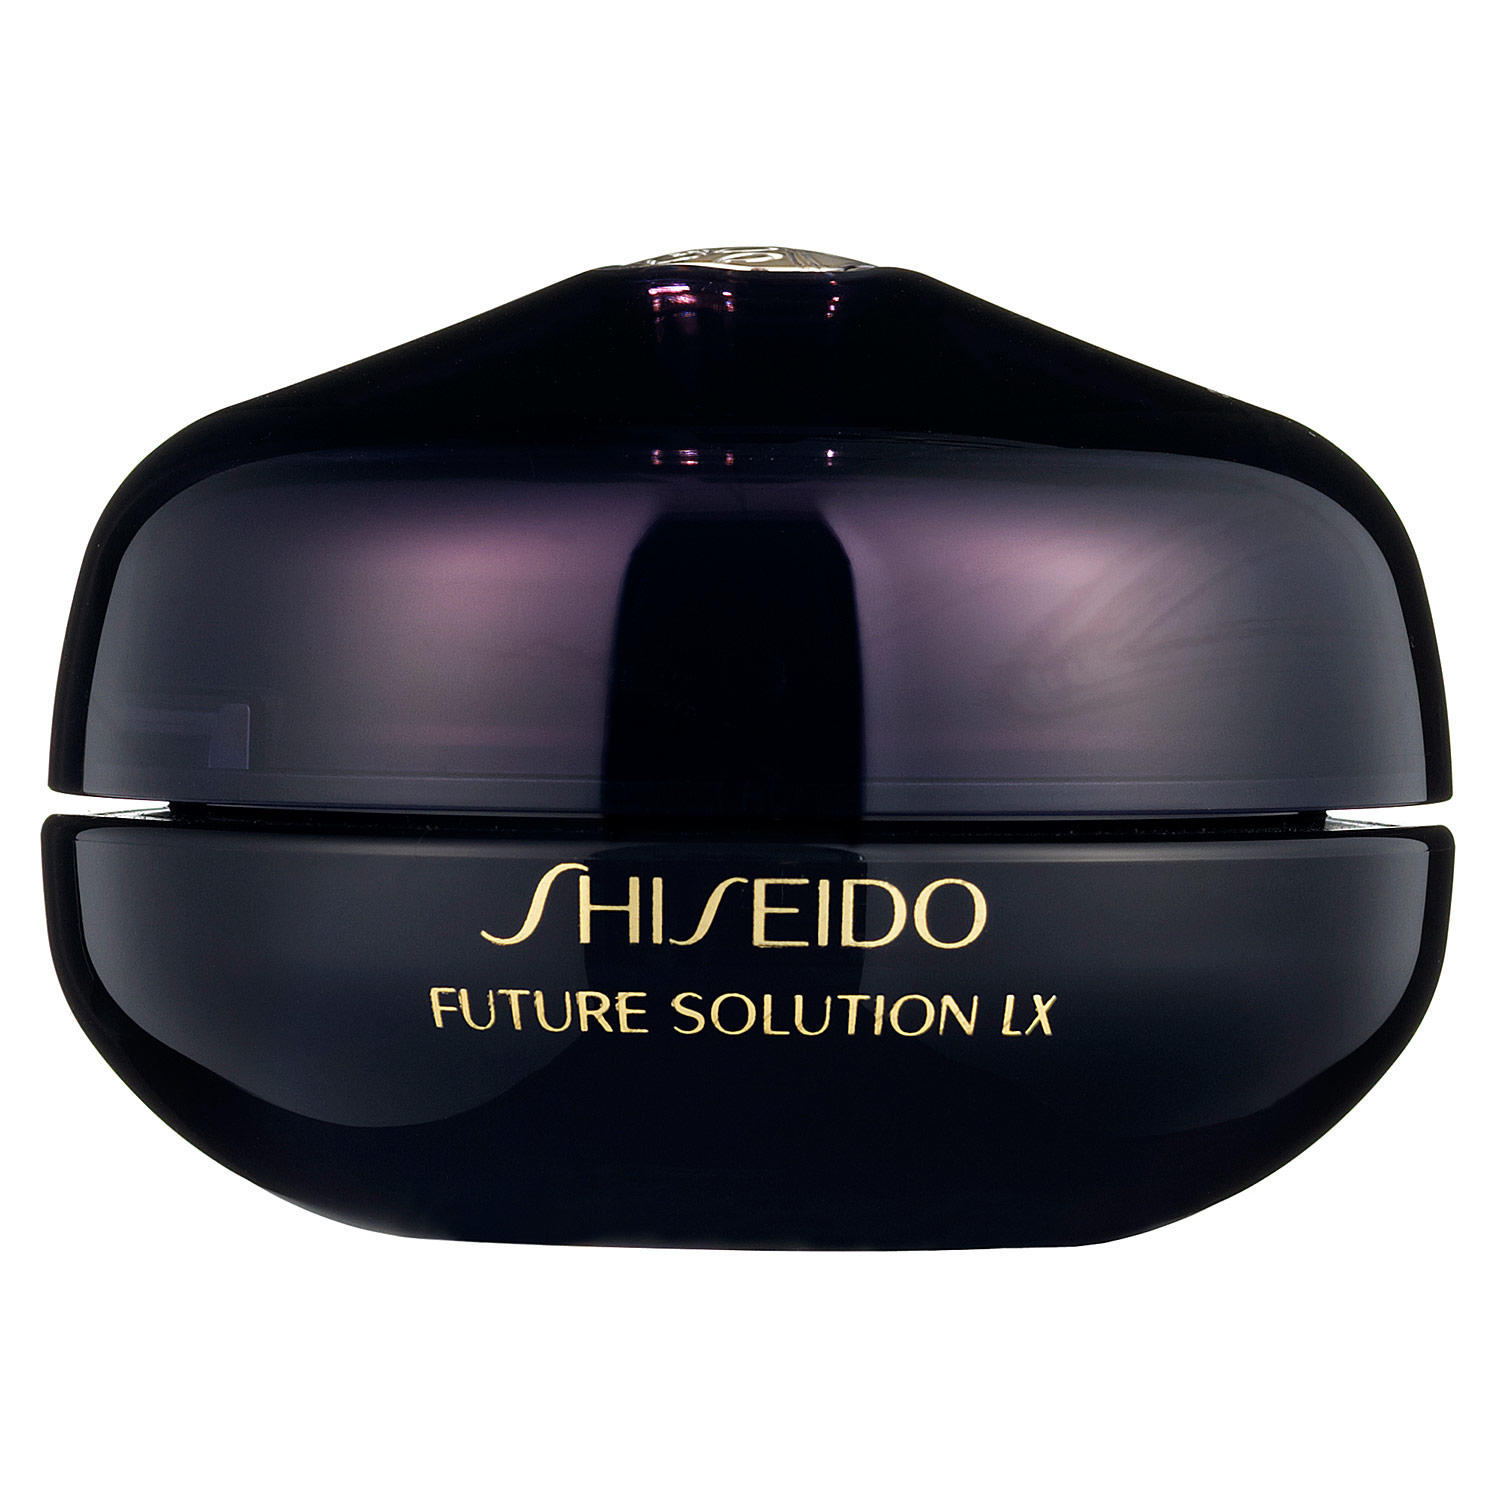 Shiseido lx. Крем Shiseido Future solution. Шисейдо крем Future solution LX. Shiseido Future solution LX Eye and Lip Contour Regenerating Cream e. Тональный крем Shiseido Future solution LX тон Neutral.